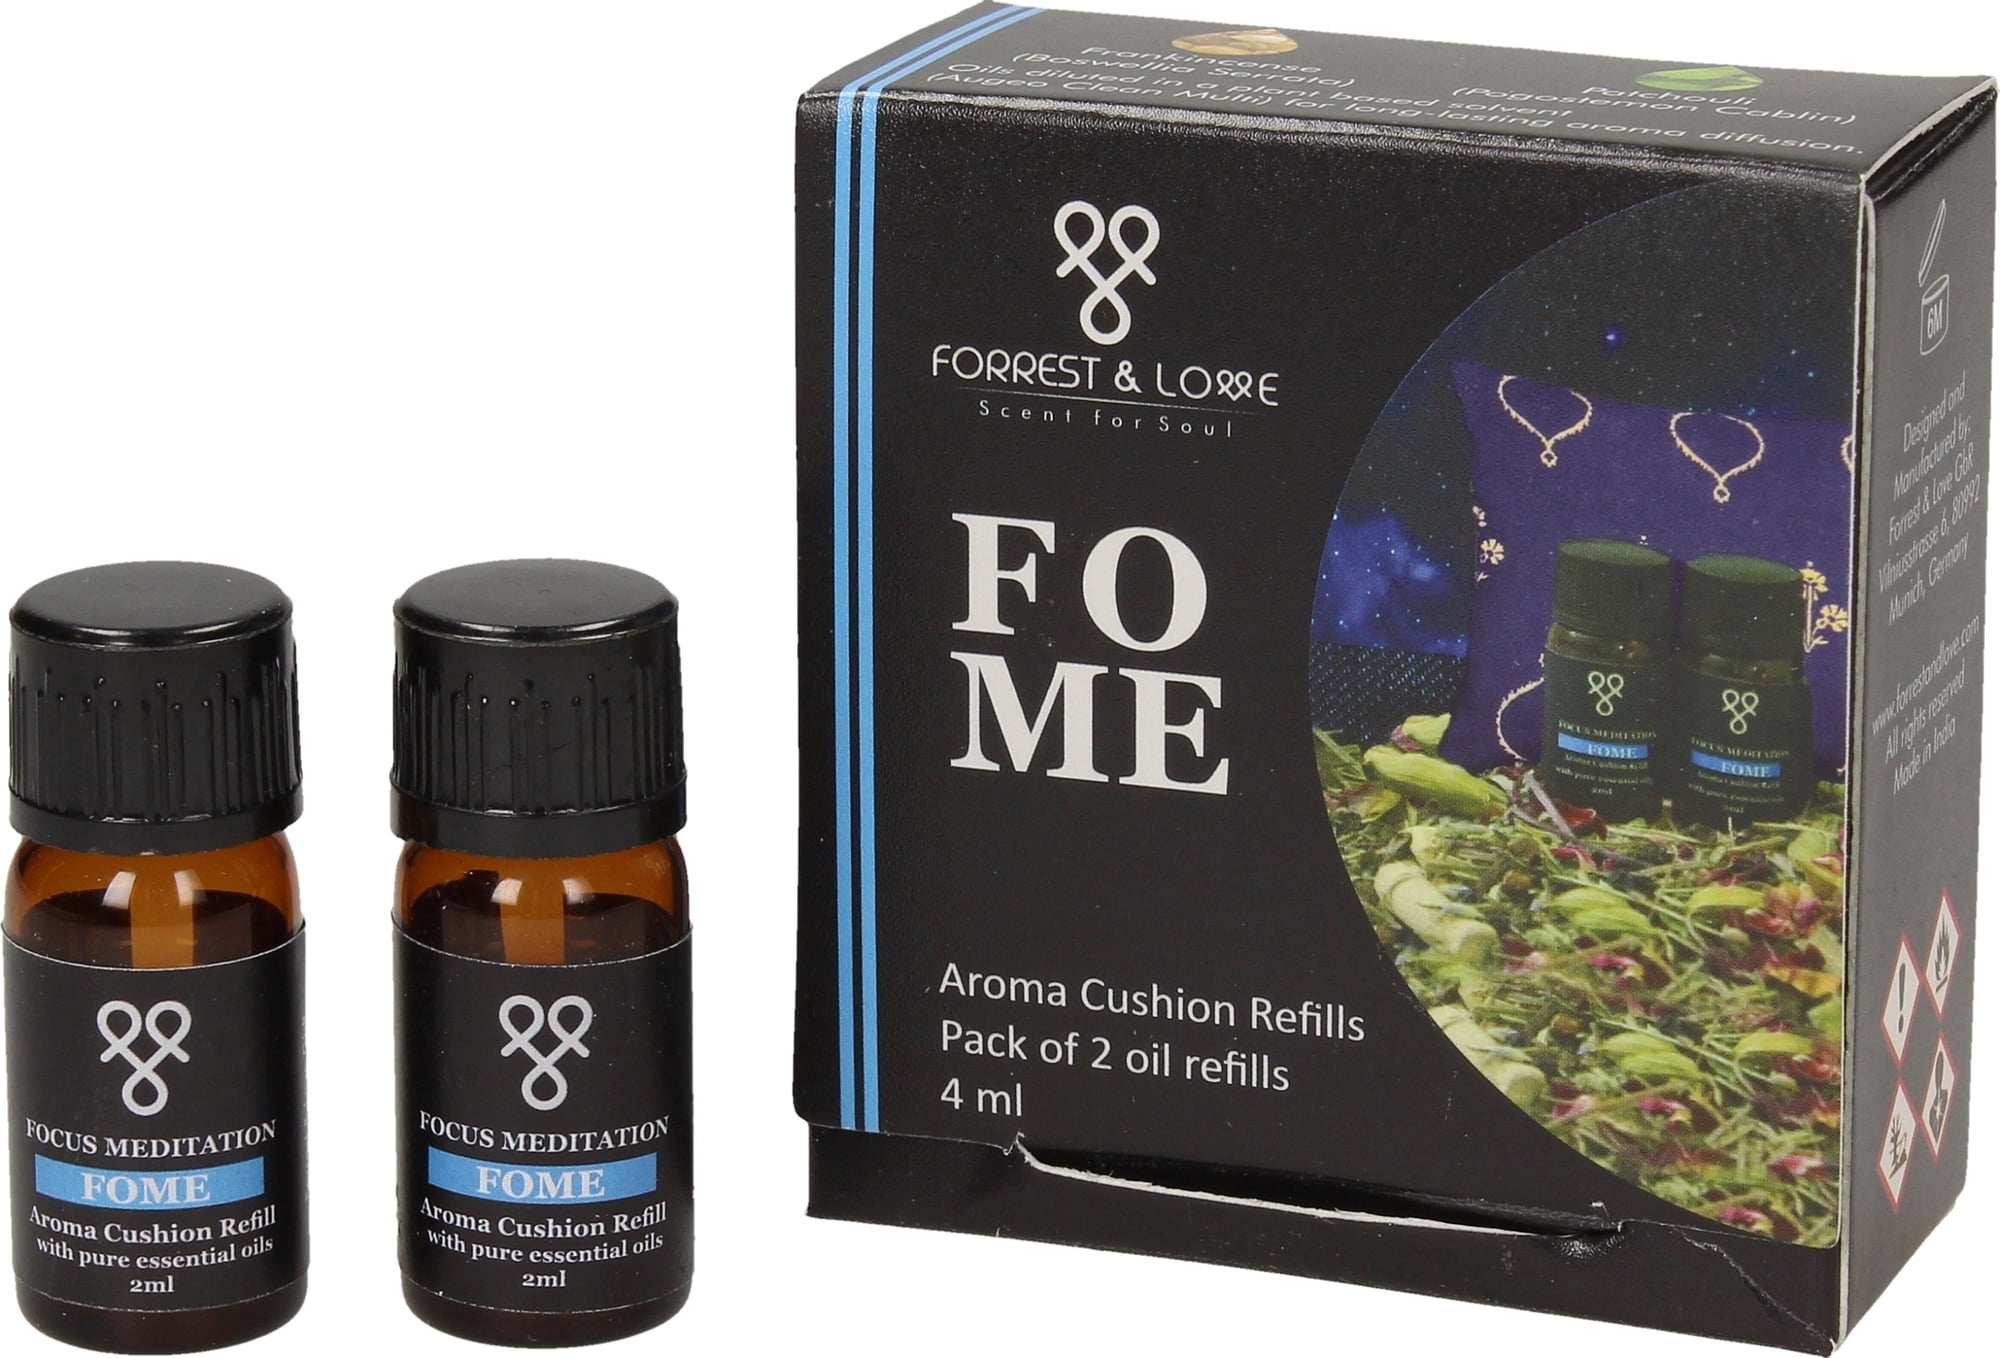 Forrest & Love FOME Focus Meditation Refill Oil